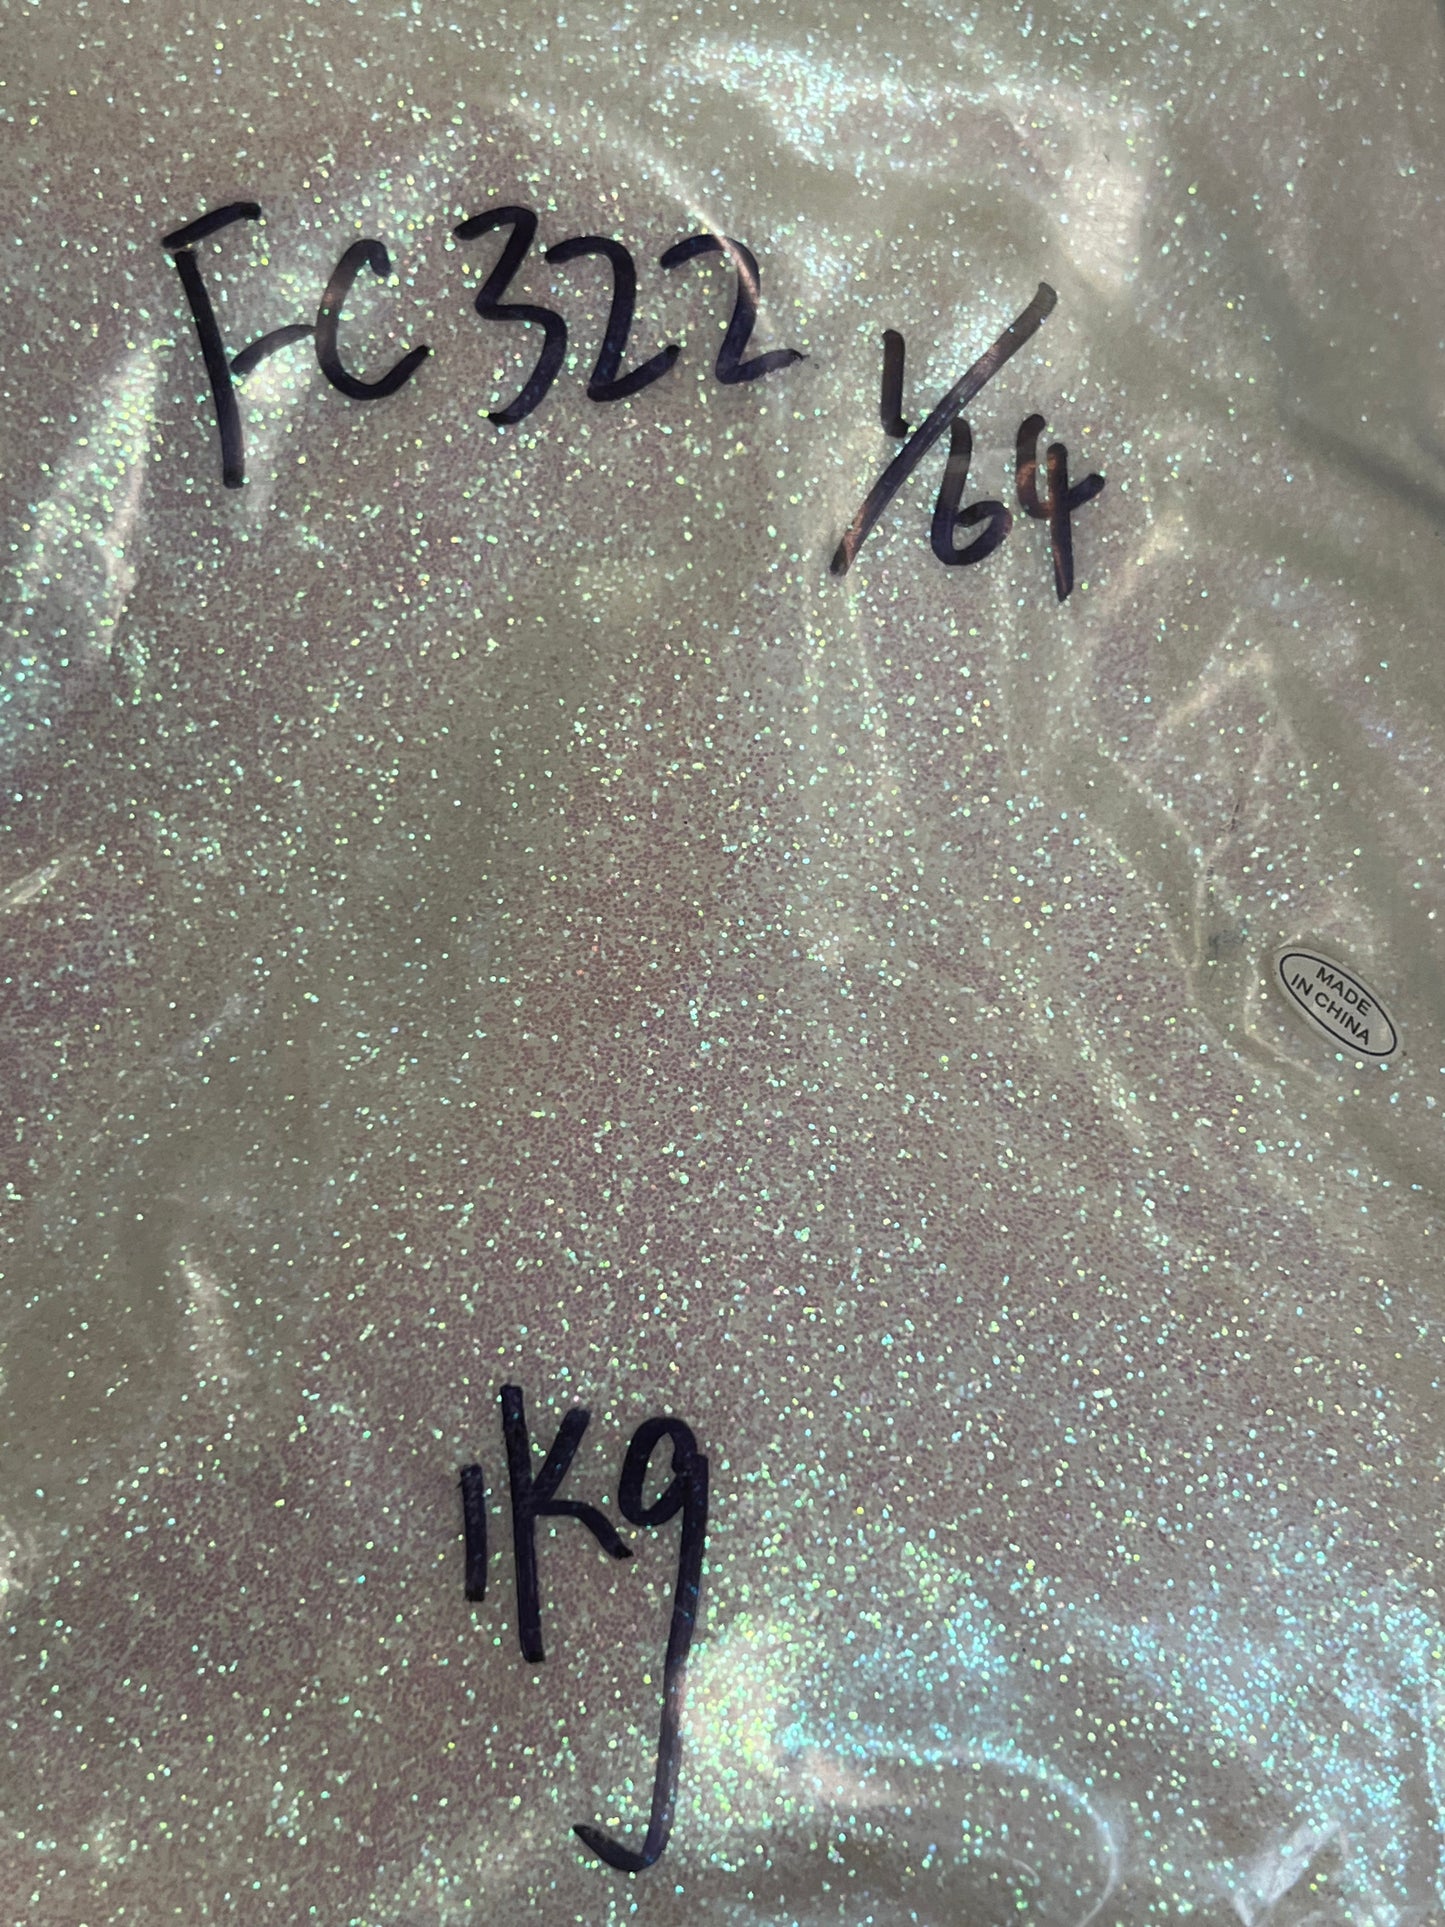 Glitter 1 kilograms bags (2.2 LBS) - VIP Extensions